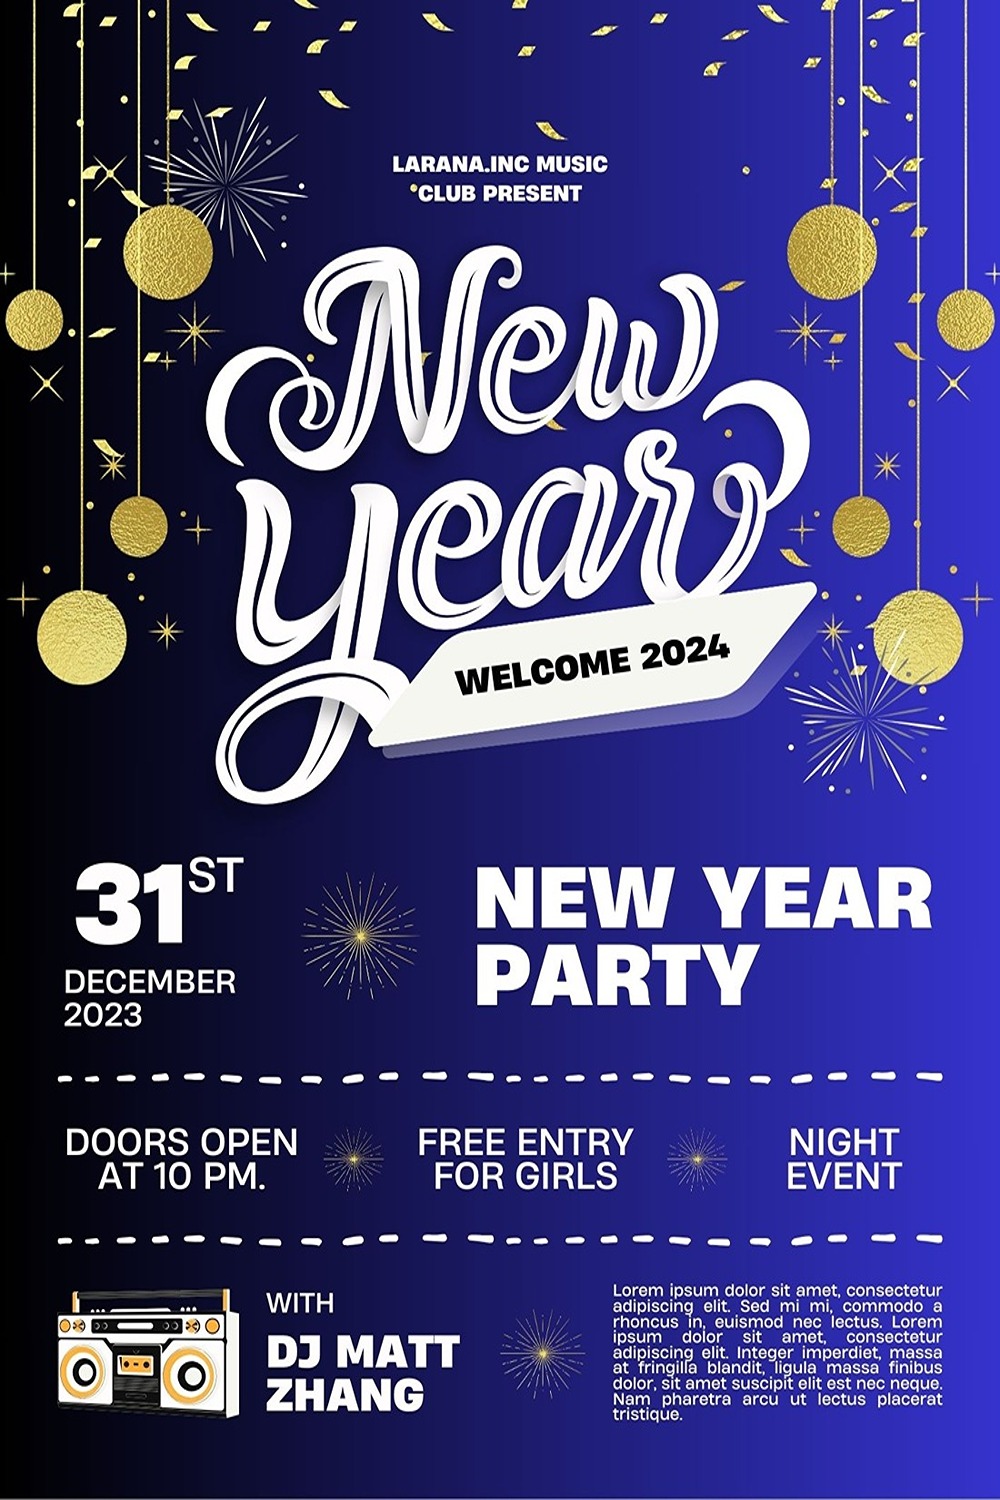 Party Poster - Invitation December 31 Celebration Total = 04 pinterest preview image.